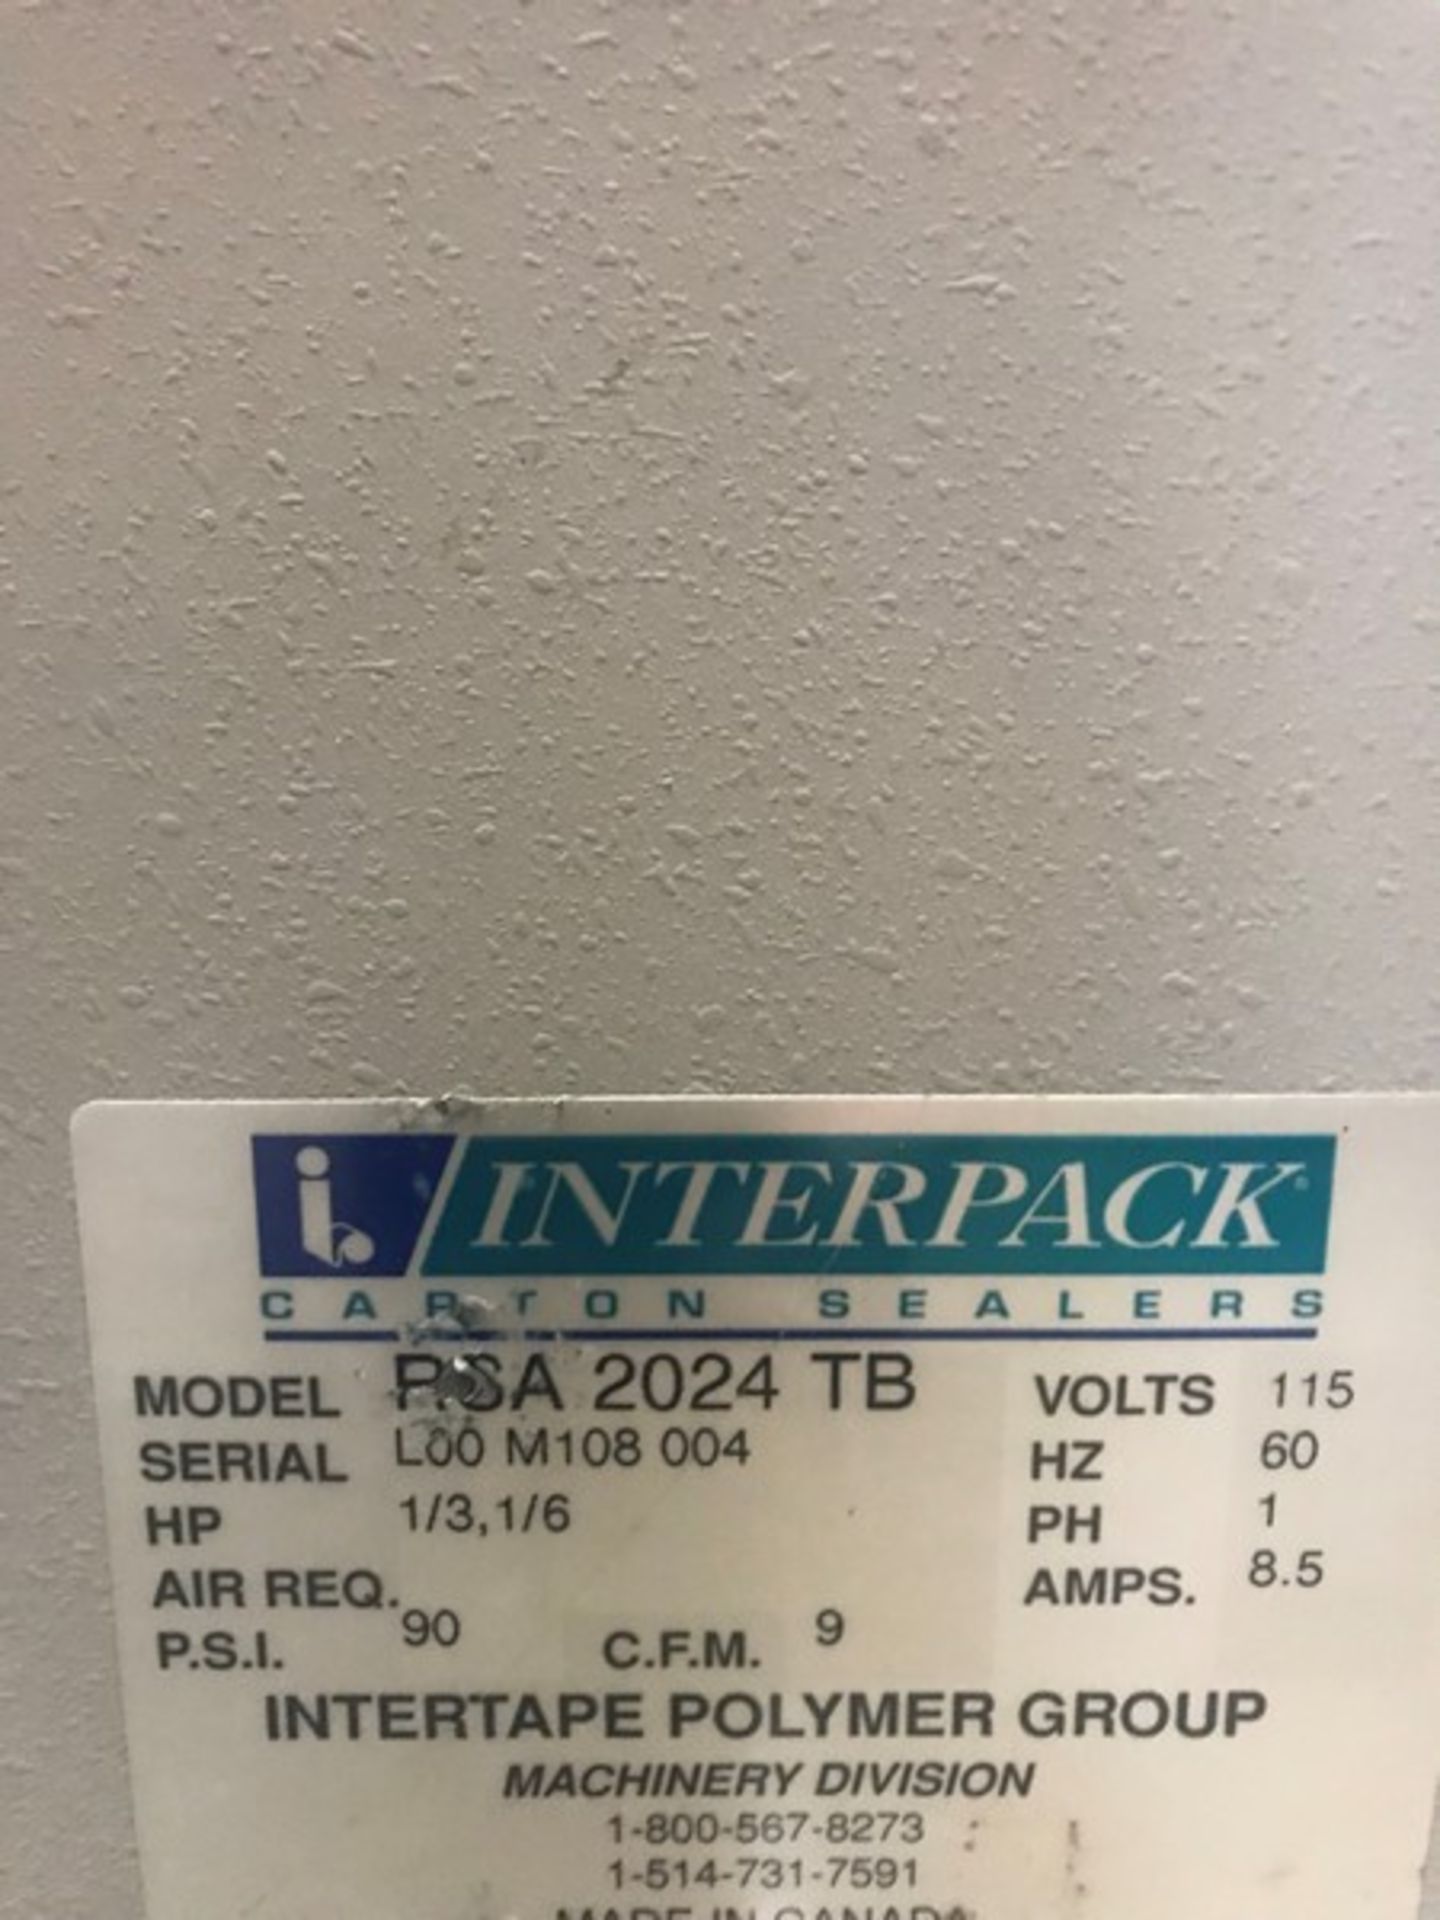 Interpack Carton Sealer, Model RSA2024TB, S/N L00M108-004, HP 1/3 - 1/6; Volt 115, Single Phase, - Bild 3 aus 3